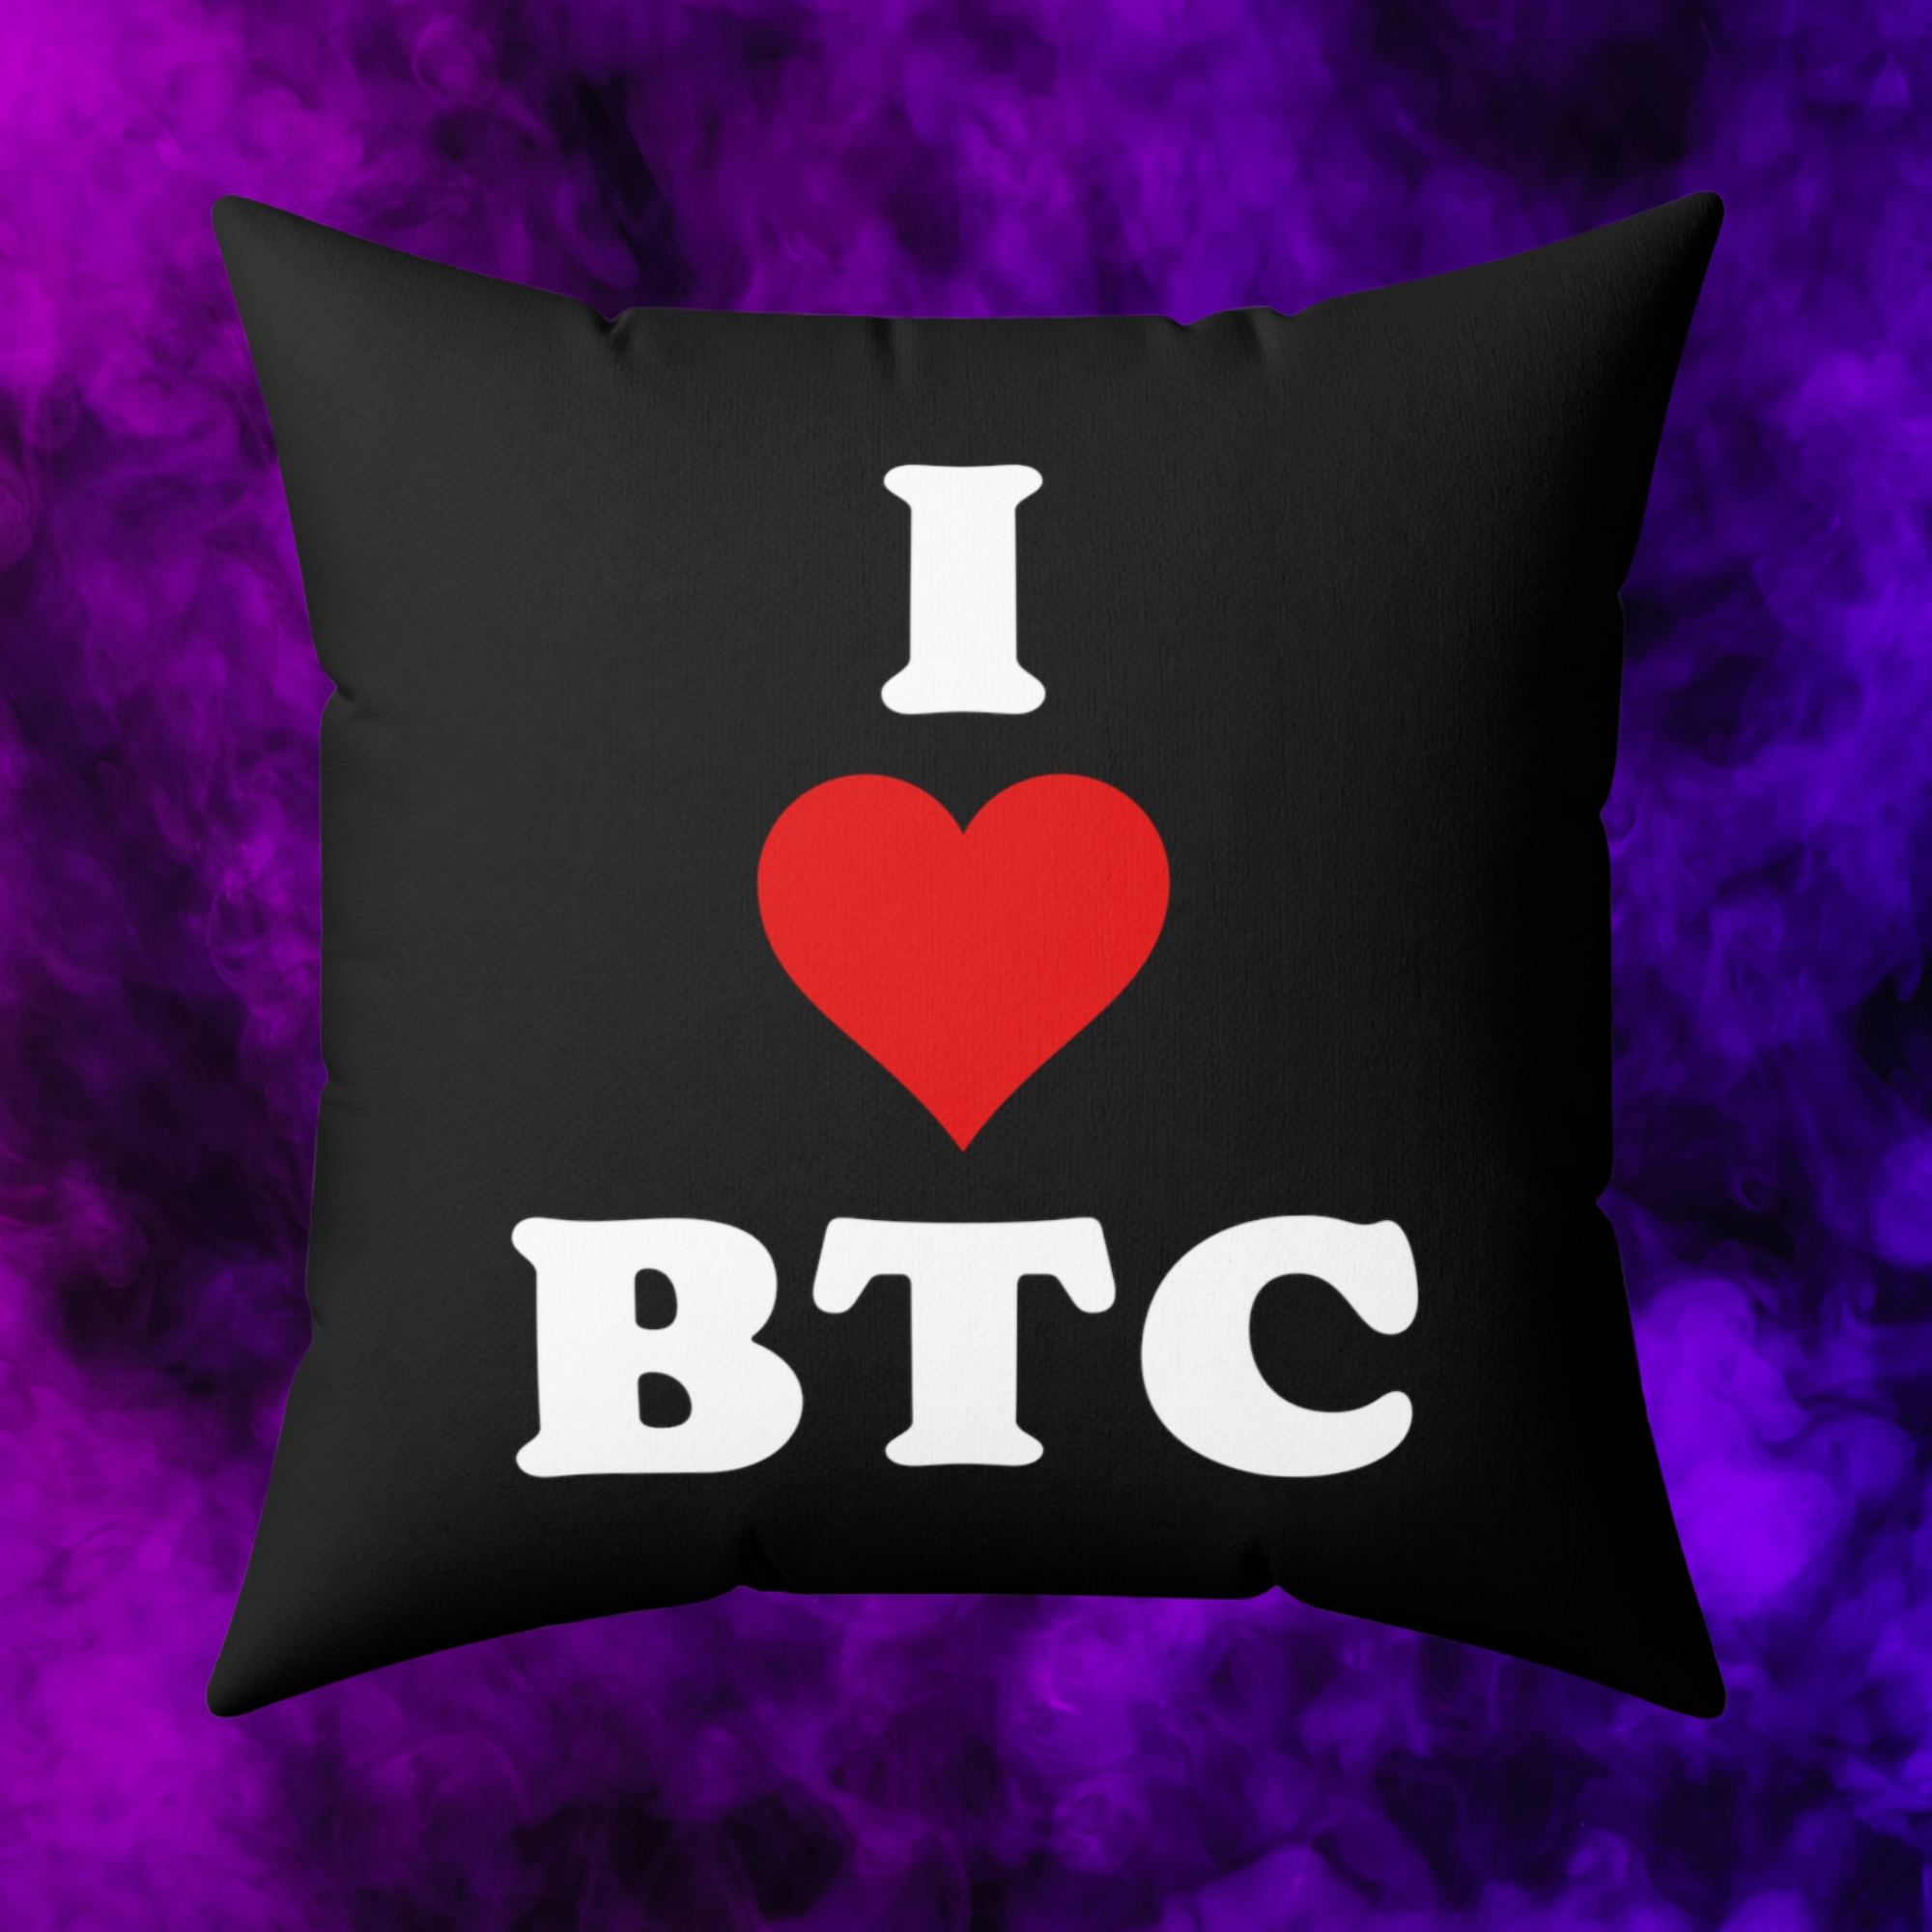 Bitcoin Home Decor - I Love BTC (Retro Style) available from NEONCRYPTO STORE.